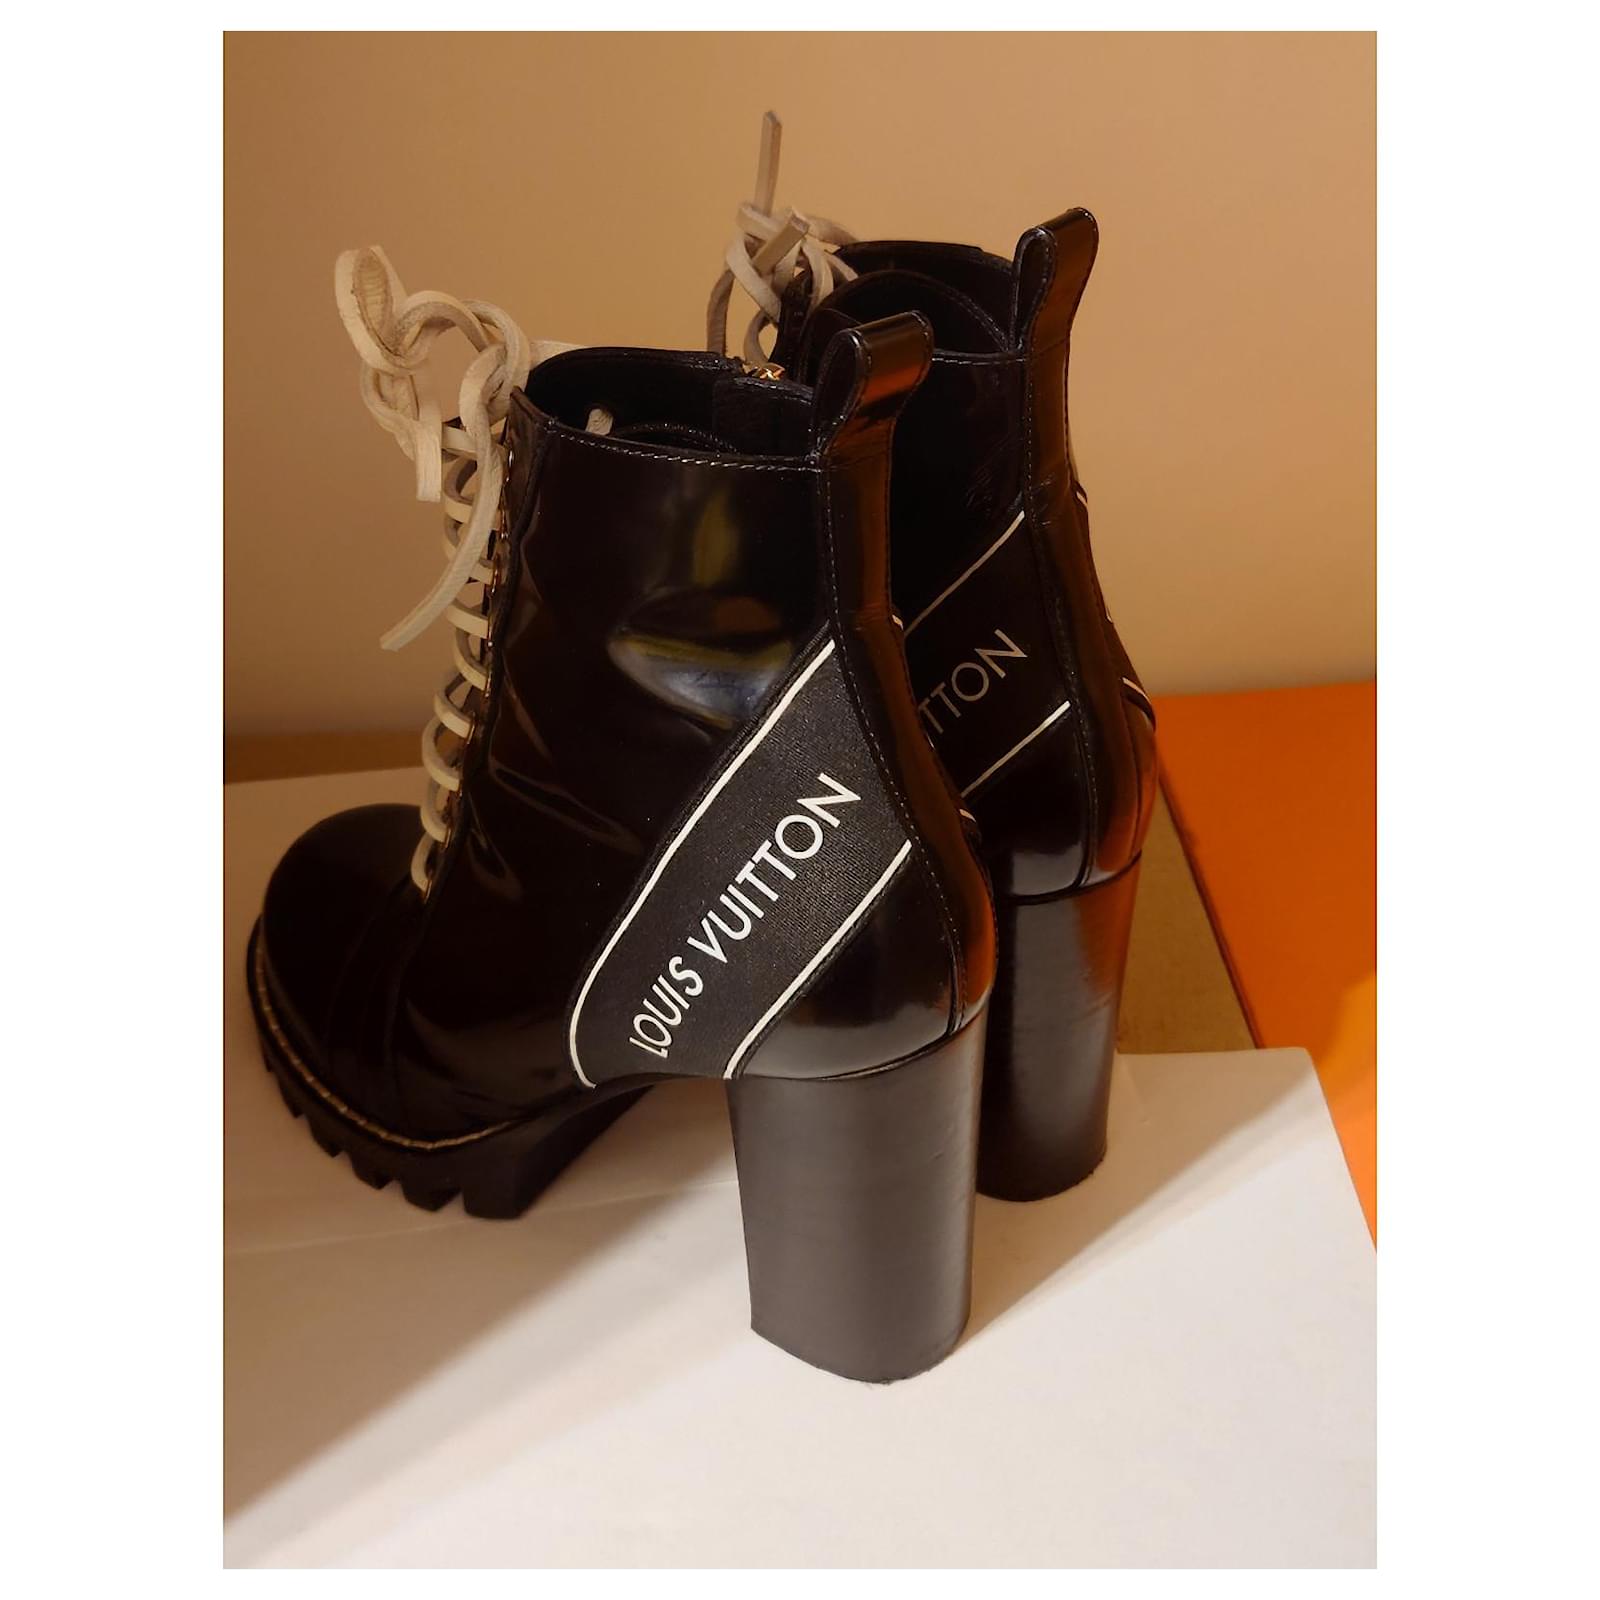 Ankle Boots Louis Vuitton Louis Vuitton Star Trail Monogram Black/Brown Ankle Boot Size 38.5 US 8.5